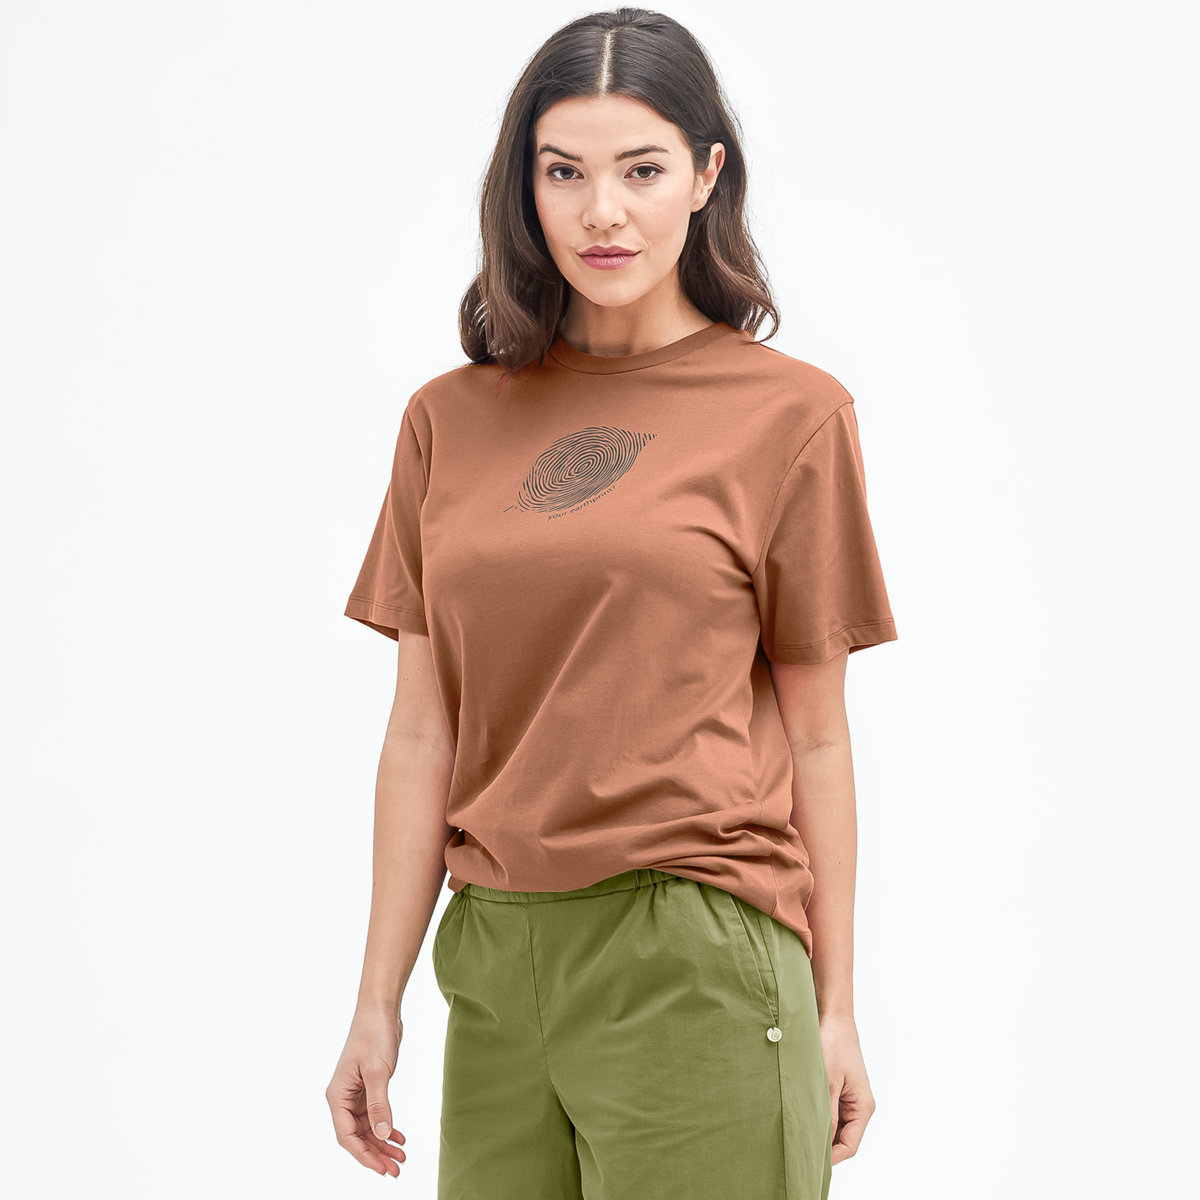 Brown Unisex T-shirt